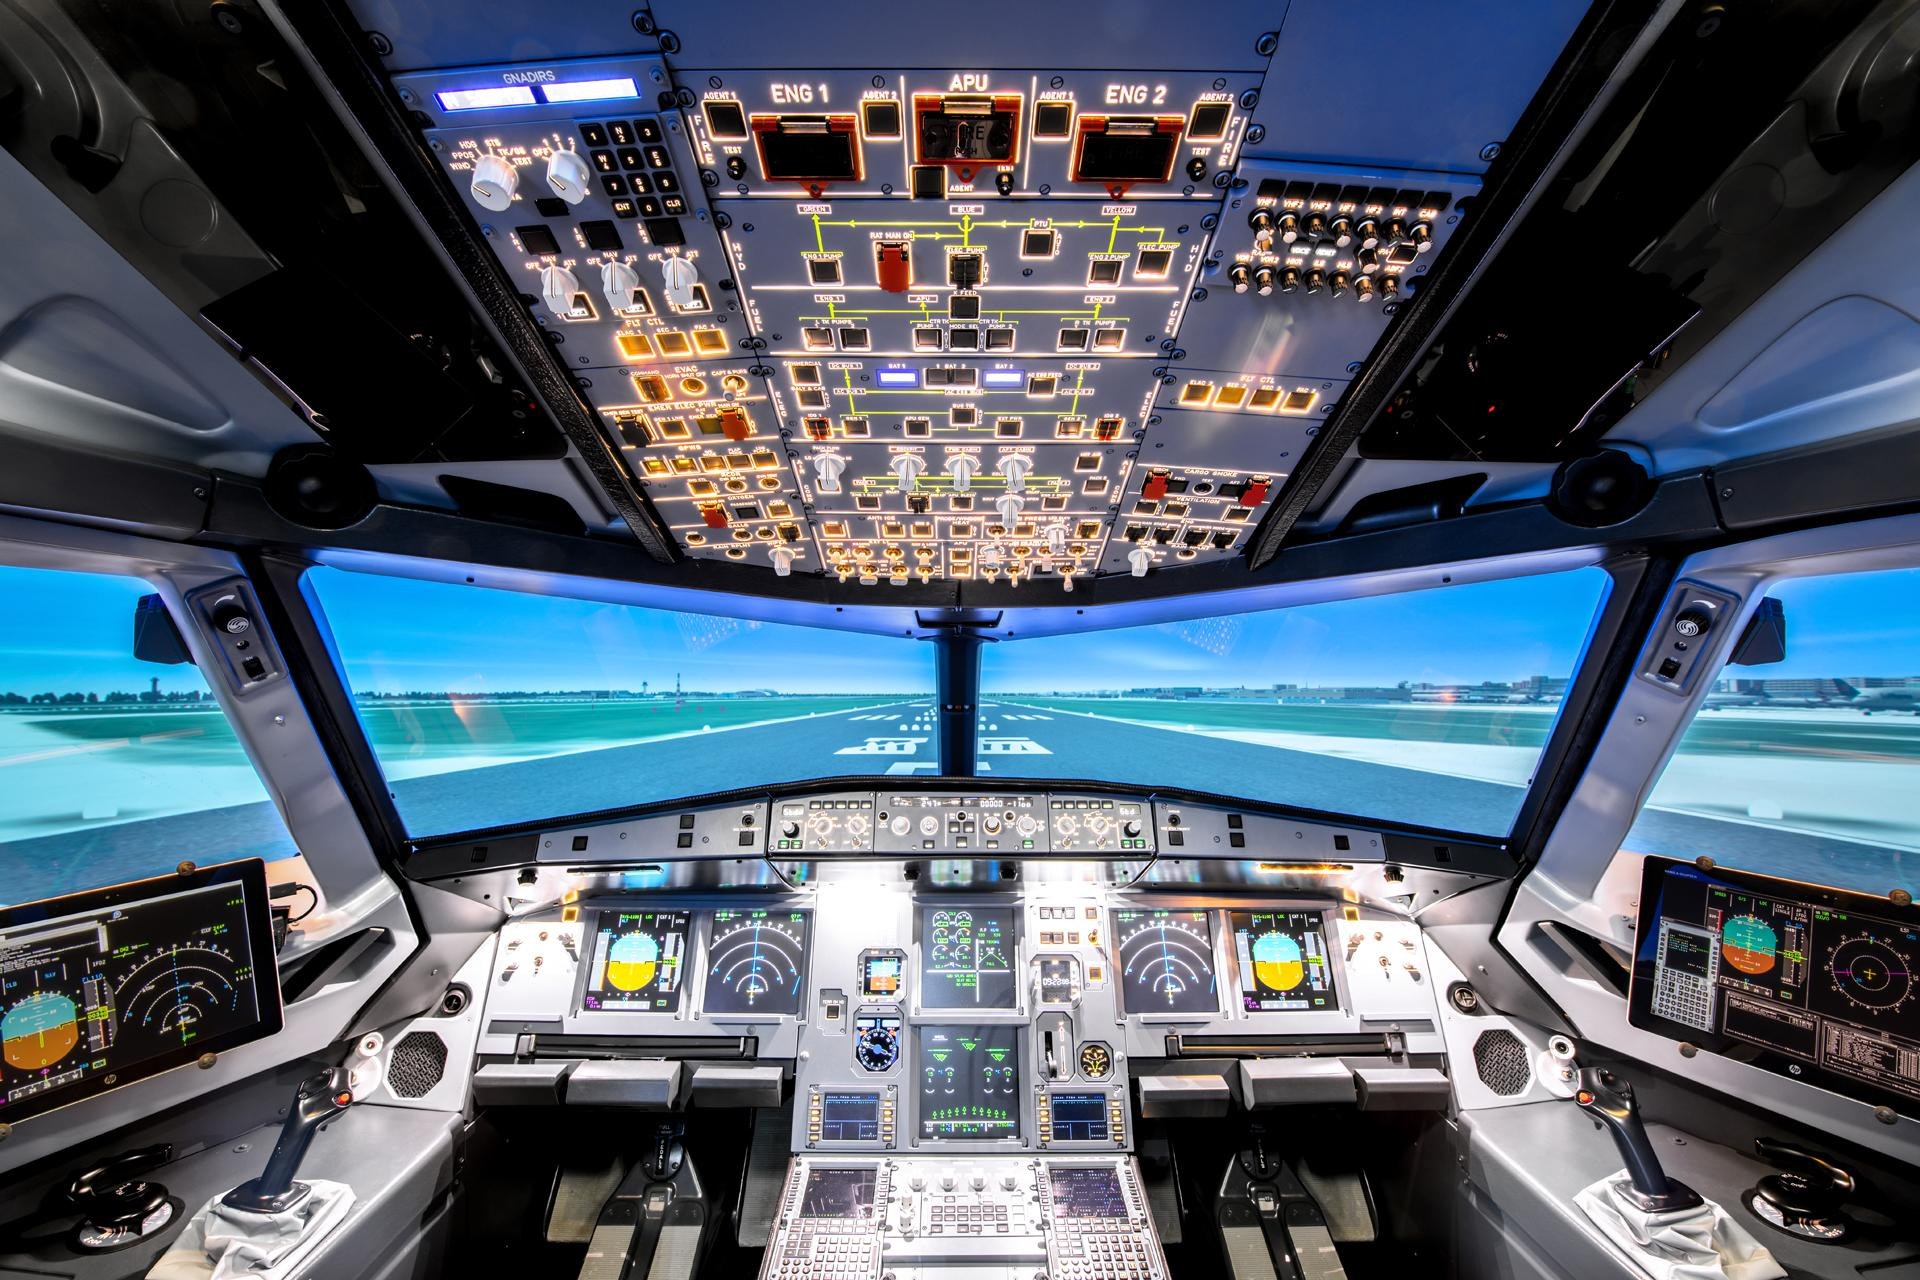 Aeroplane cockpit simulation